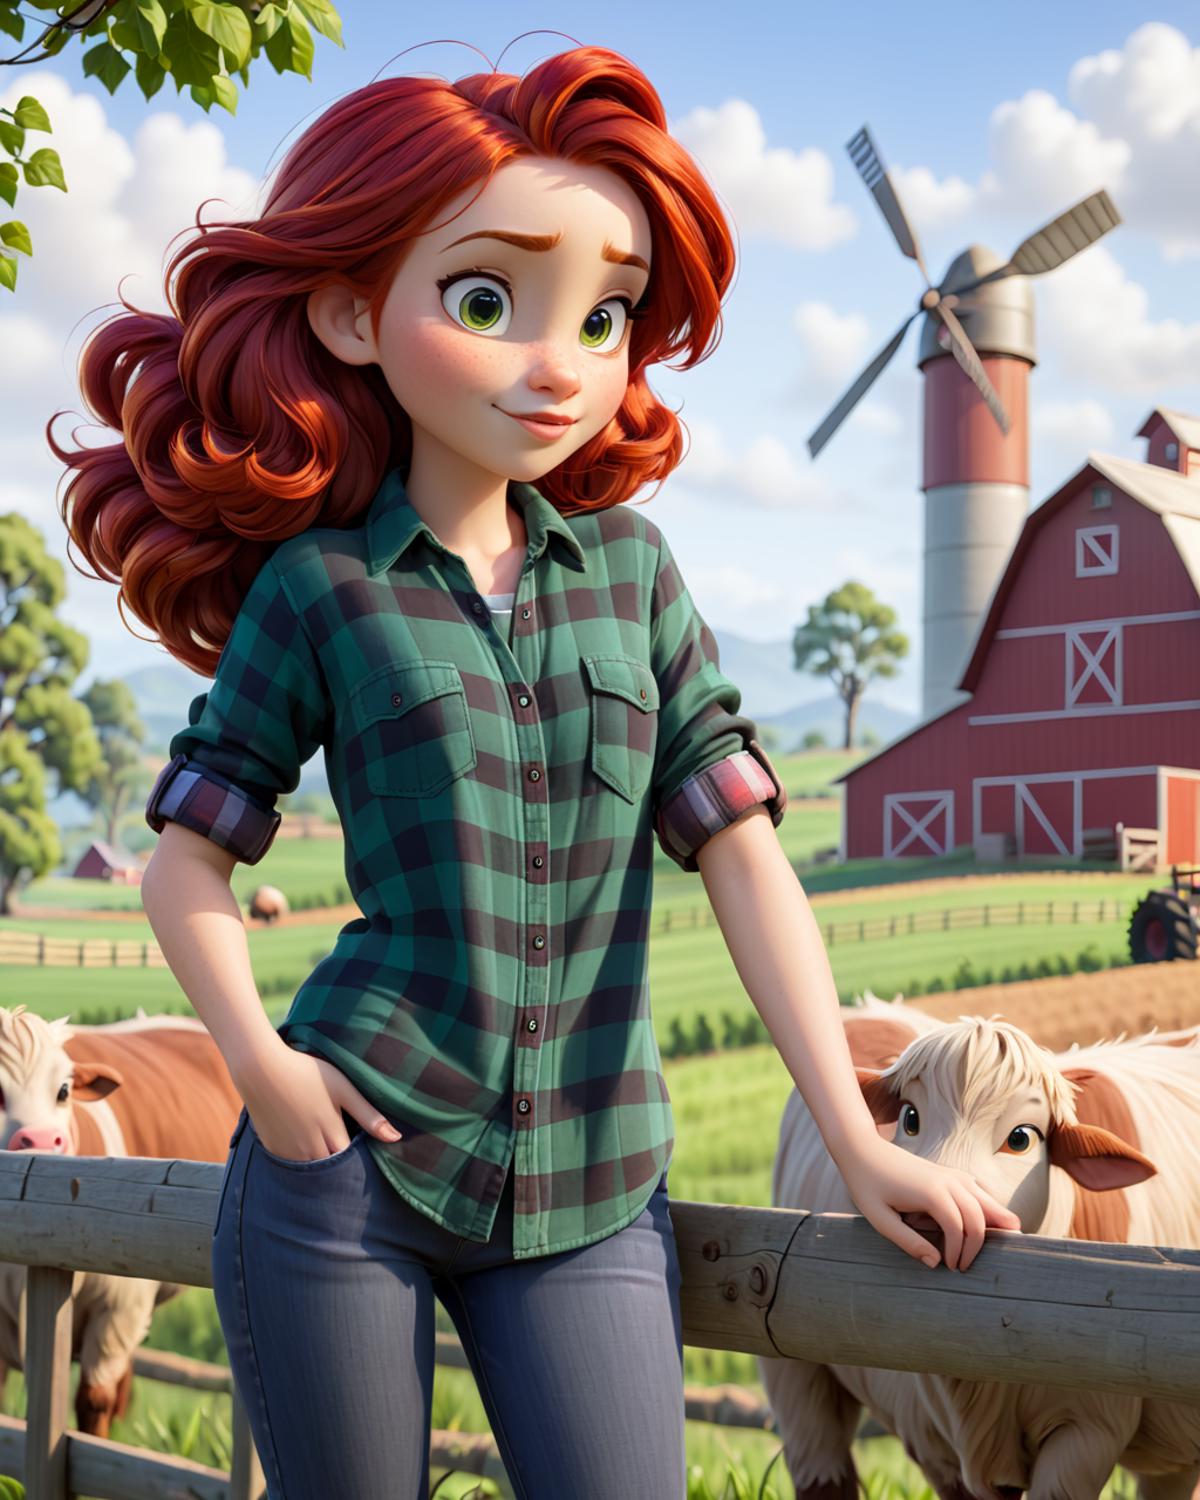 A cartoon girl wearing a plaid shirt standing next to cows.